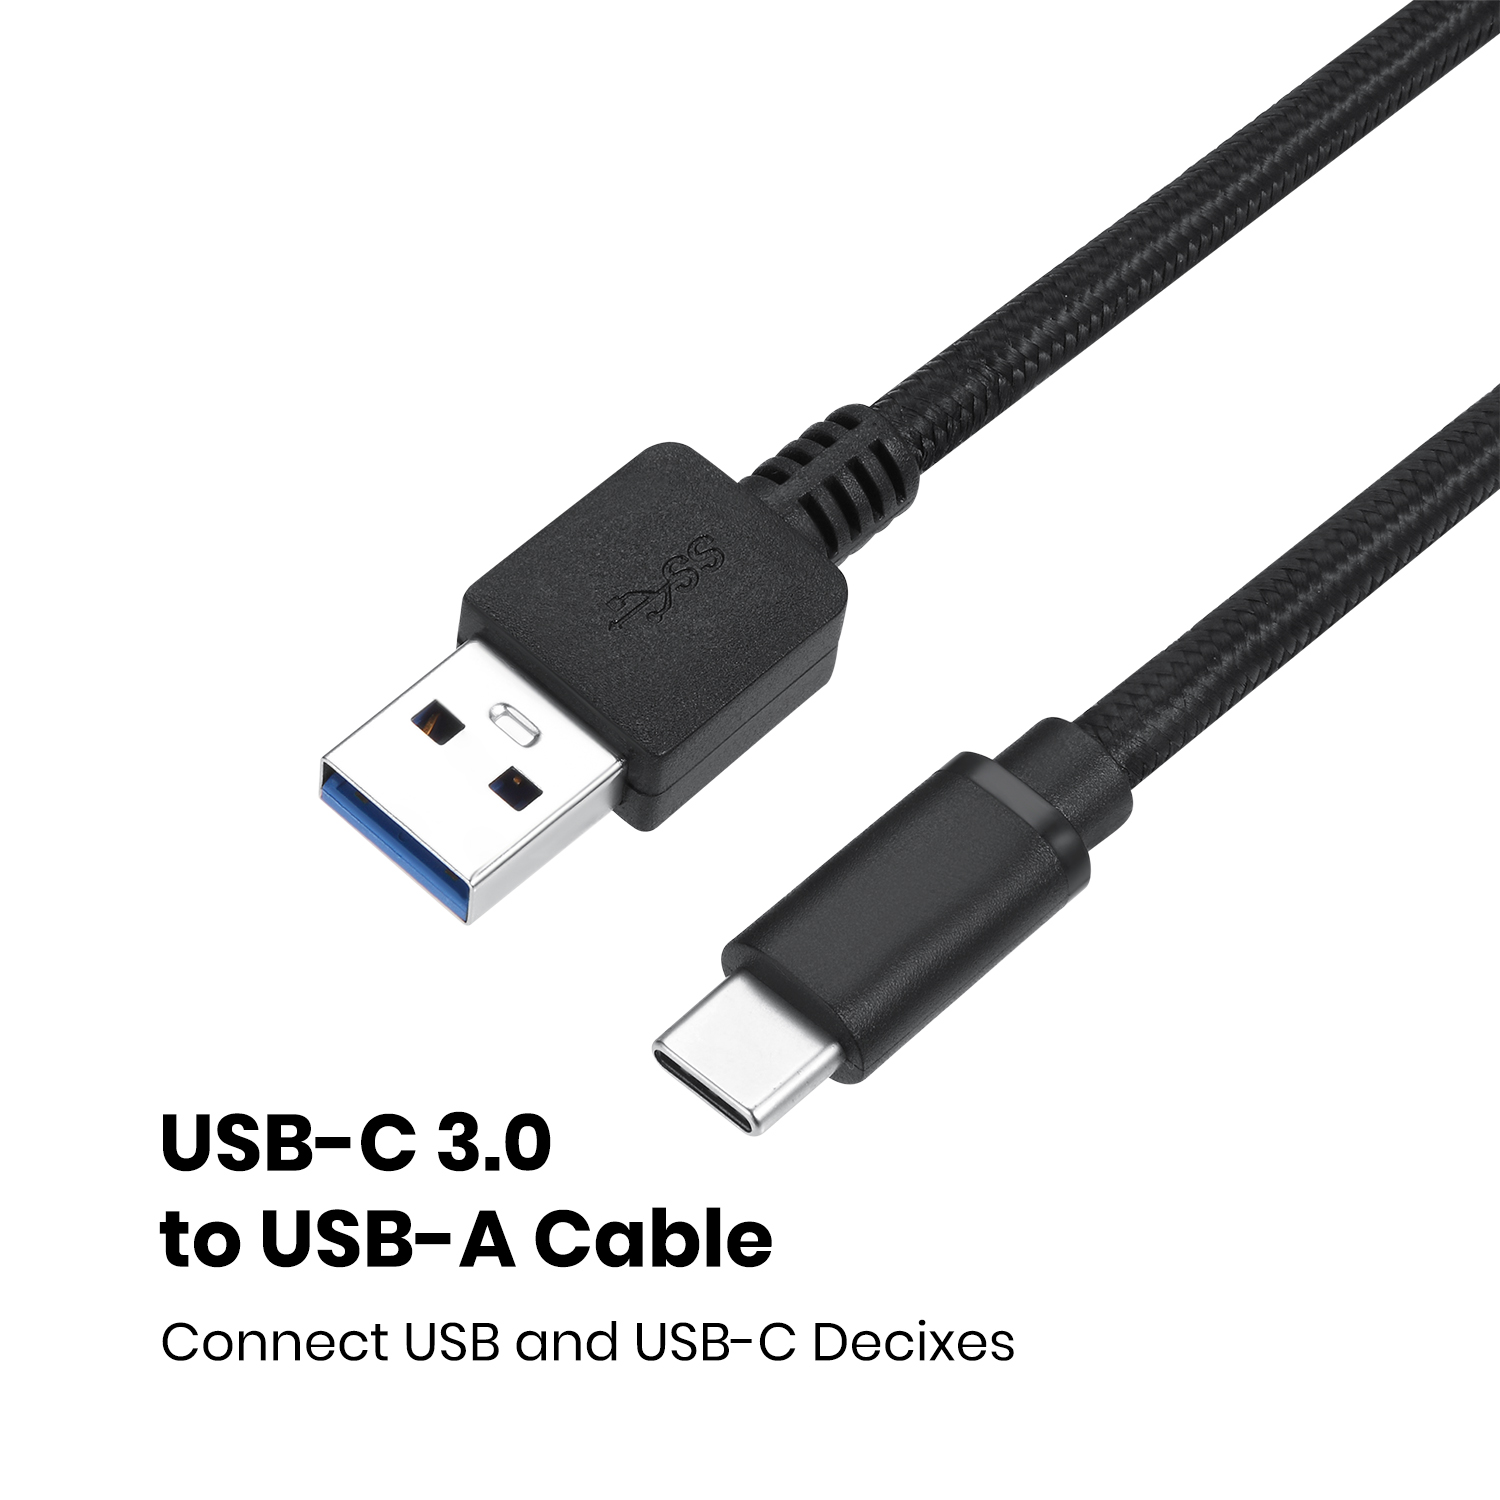 PERIXX PERIPRO-407 mit USB-C Anschluss, Schwarz USB-Kabel